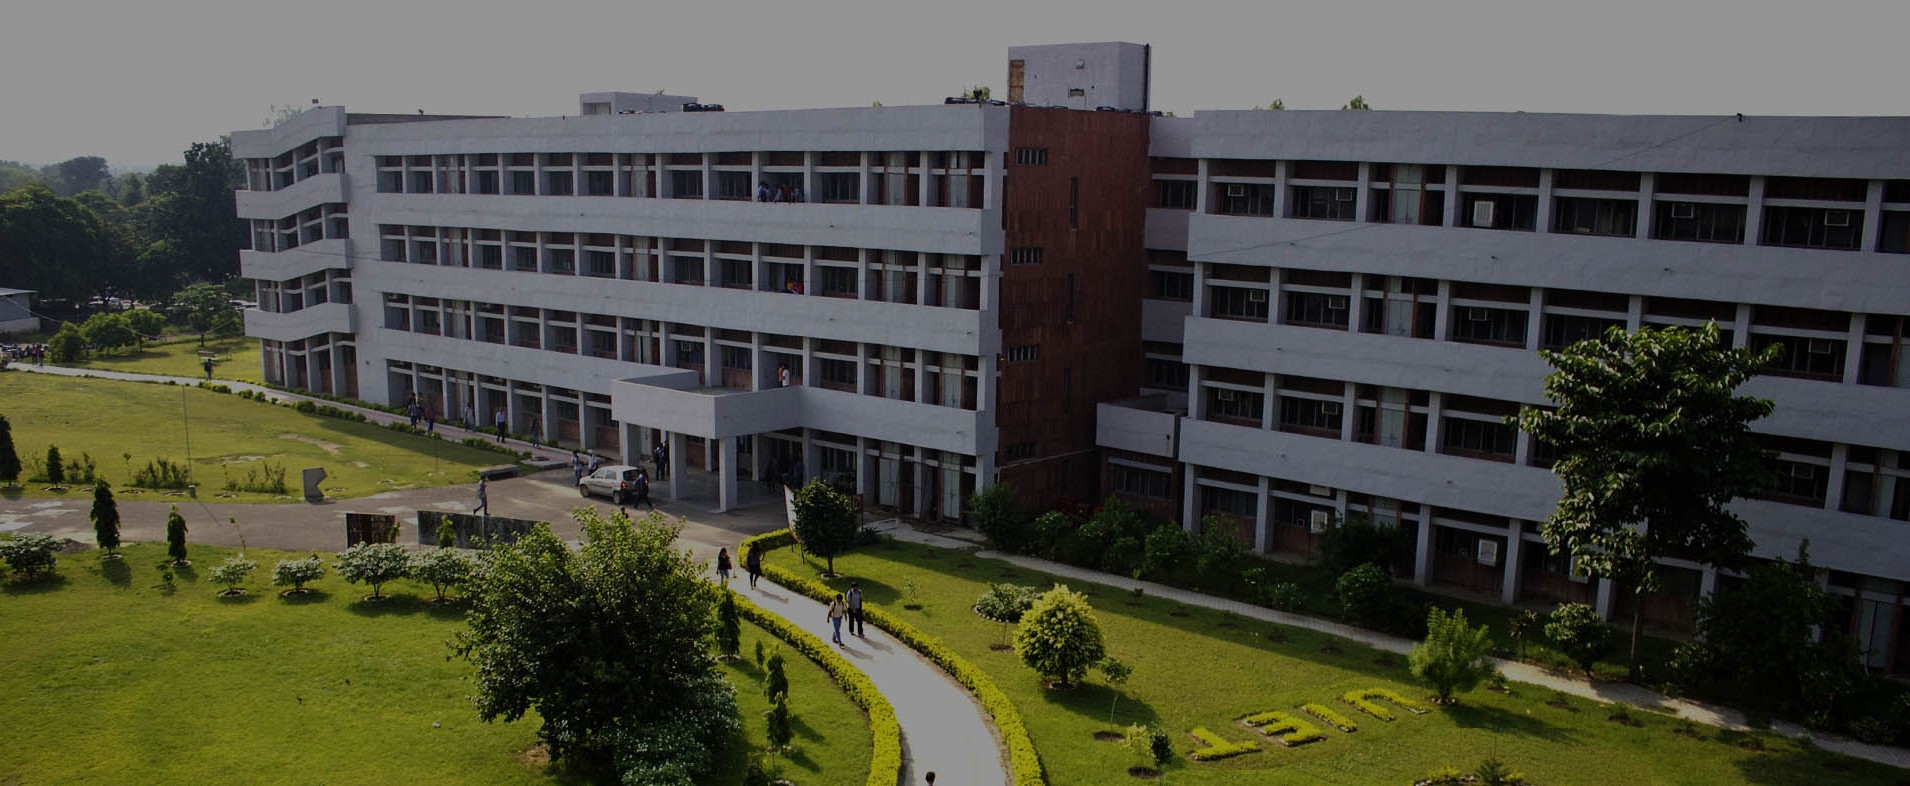 University Institute of Engineering (Chandigarh University), Mohali Image